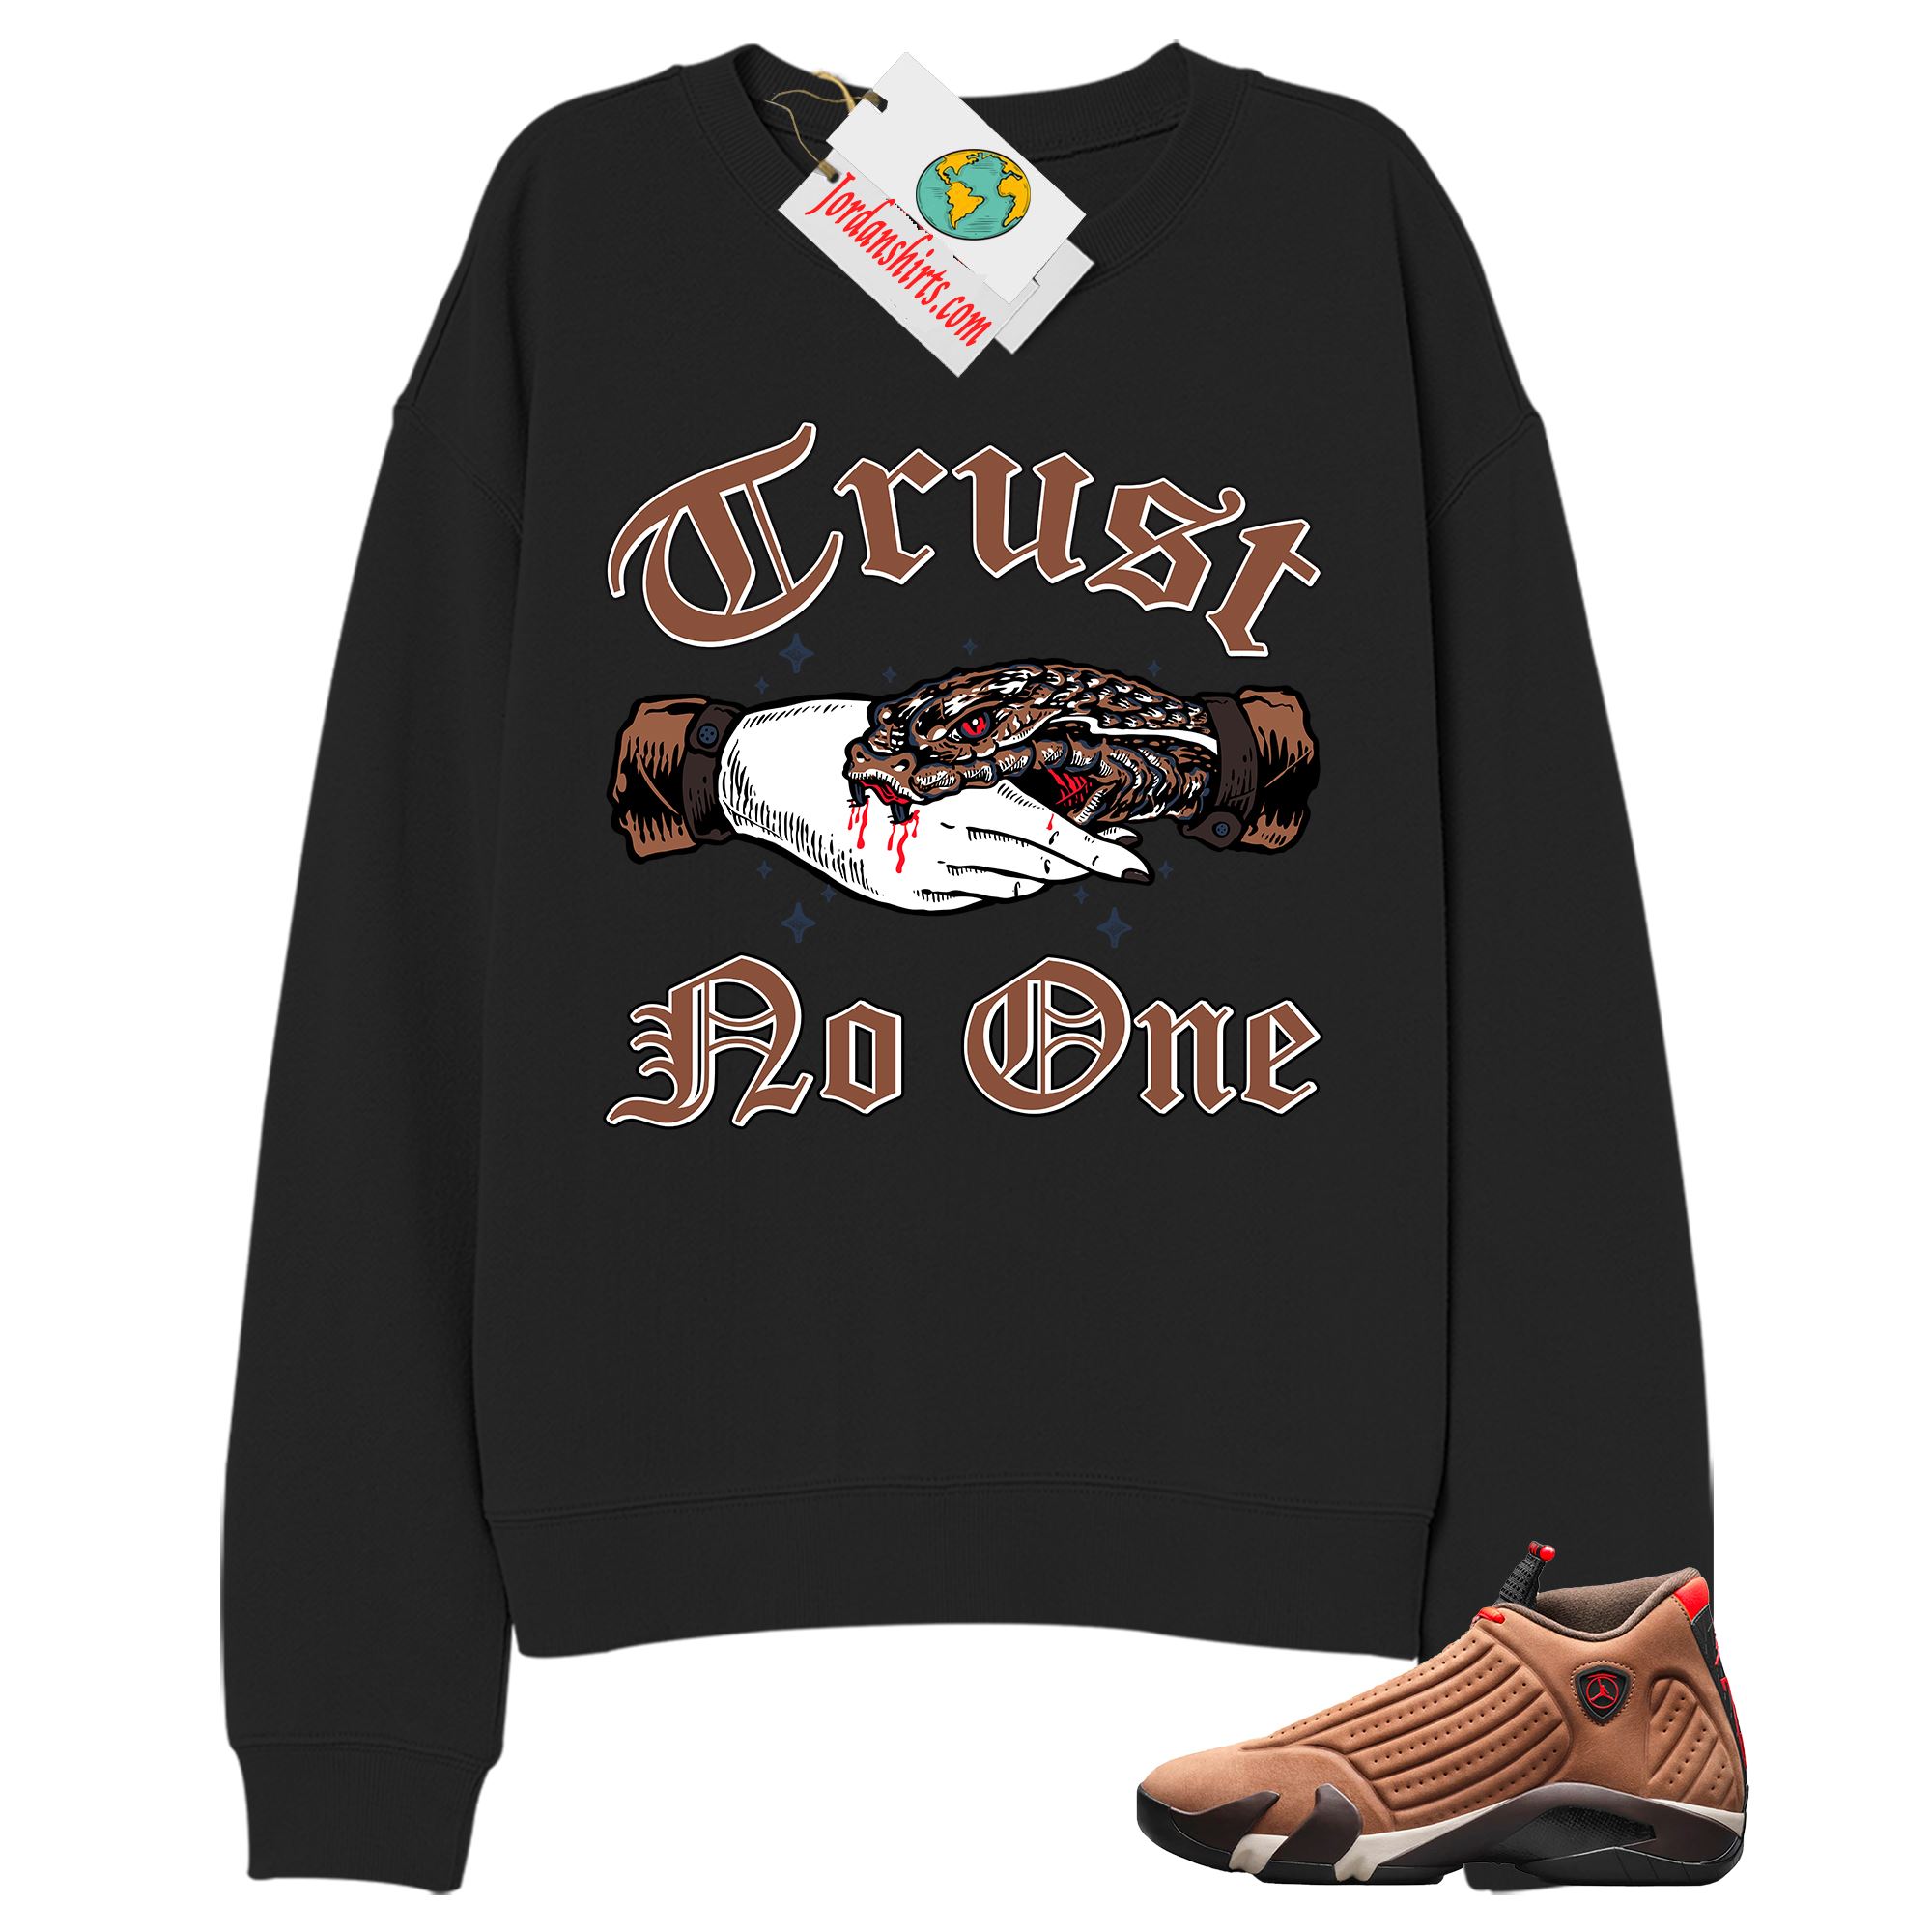 Jordan 14 Sweatshirt, Trust No One Deal With Snake Black Sweatshirt Air Jordan 14 Winterized 14s Size Up To 5xl